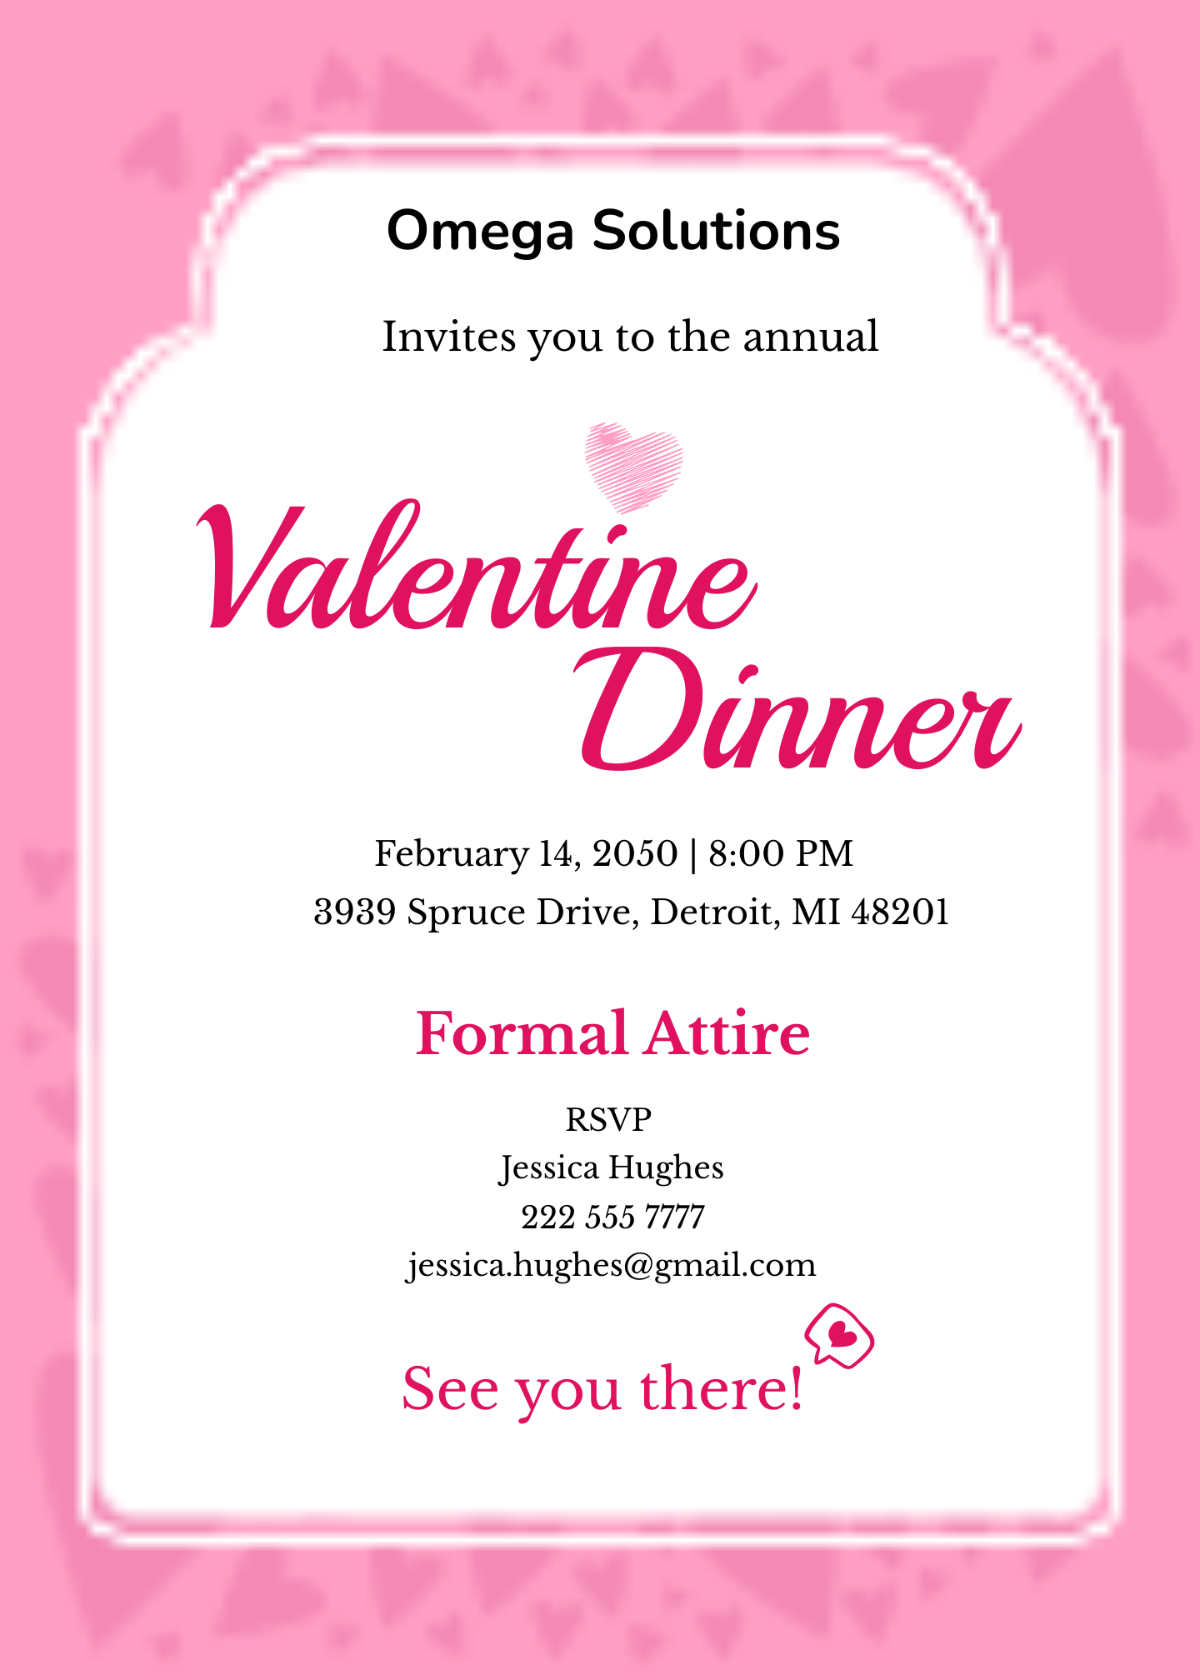 Valentine's Day Dinner Invitation